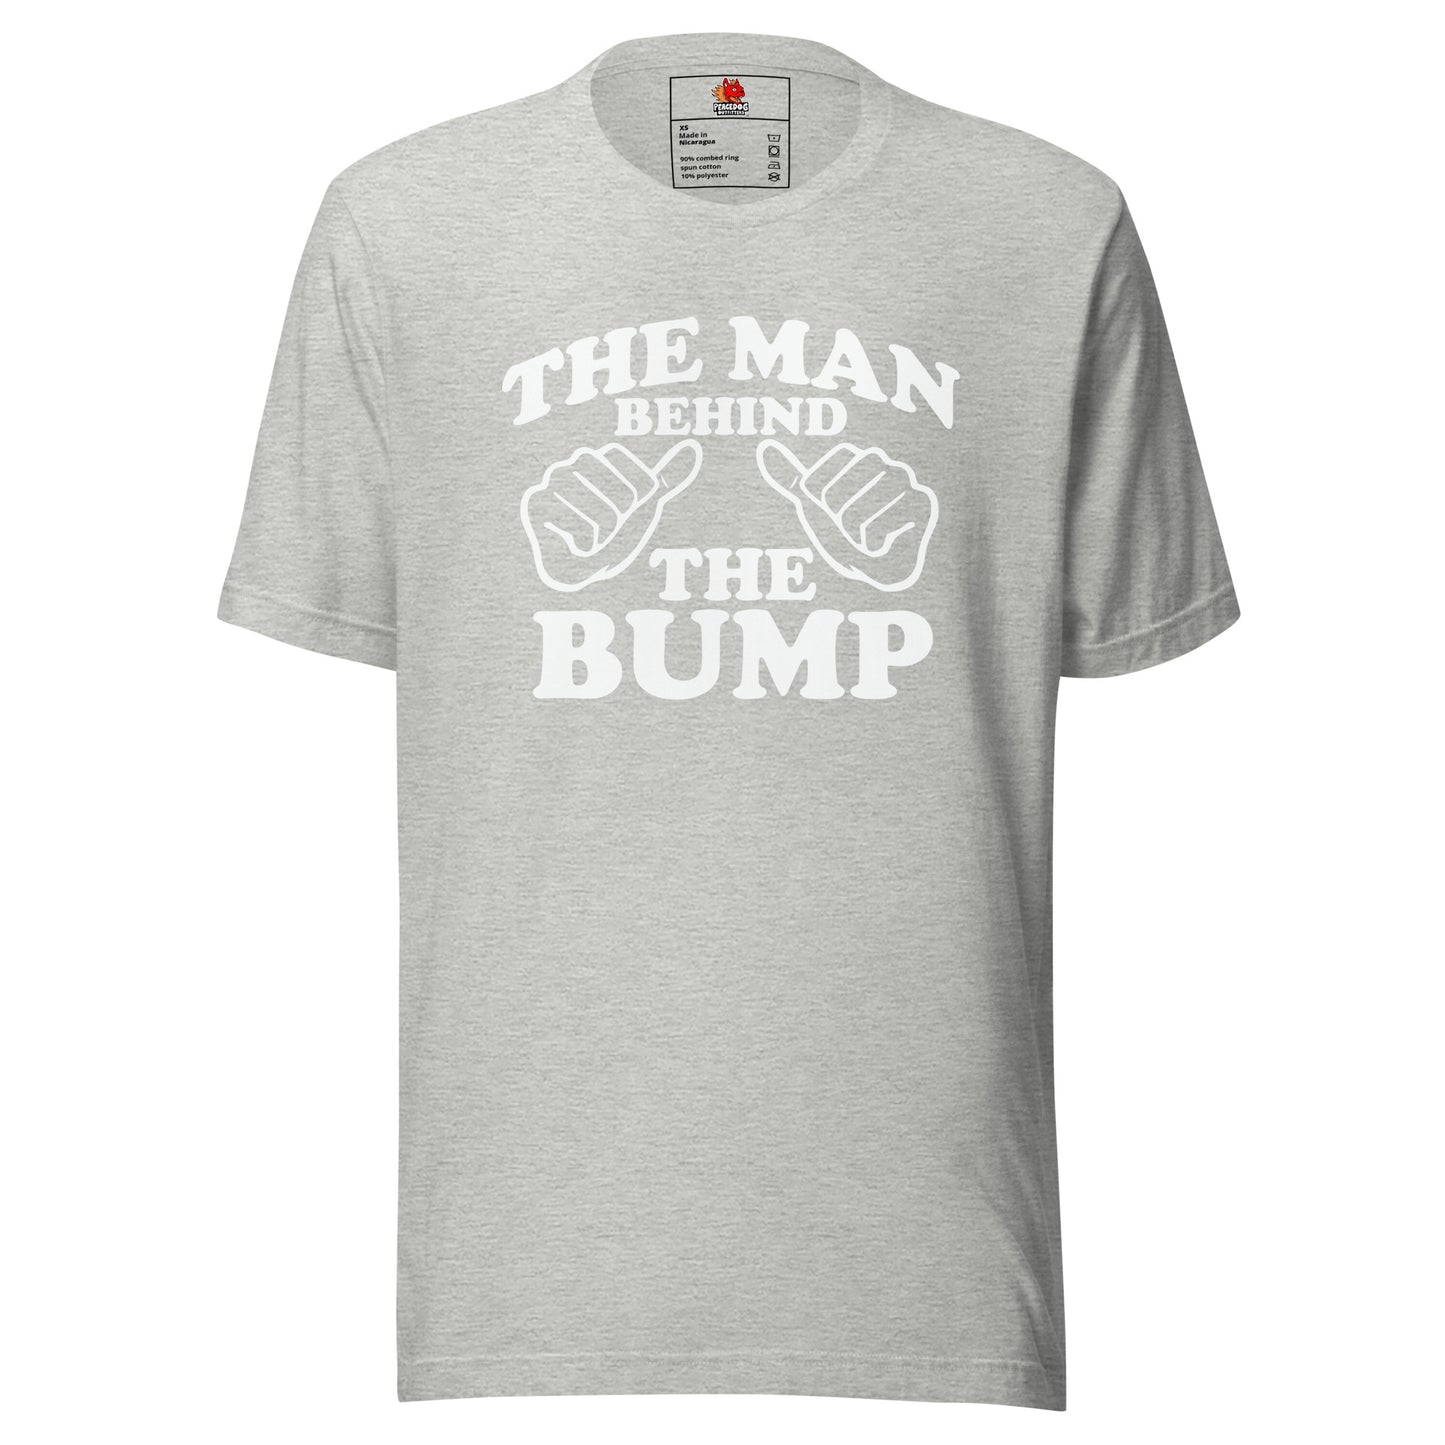 The Man Behind The Bump T-shirt